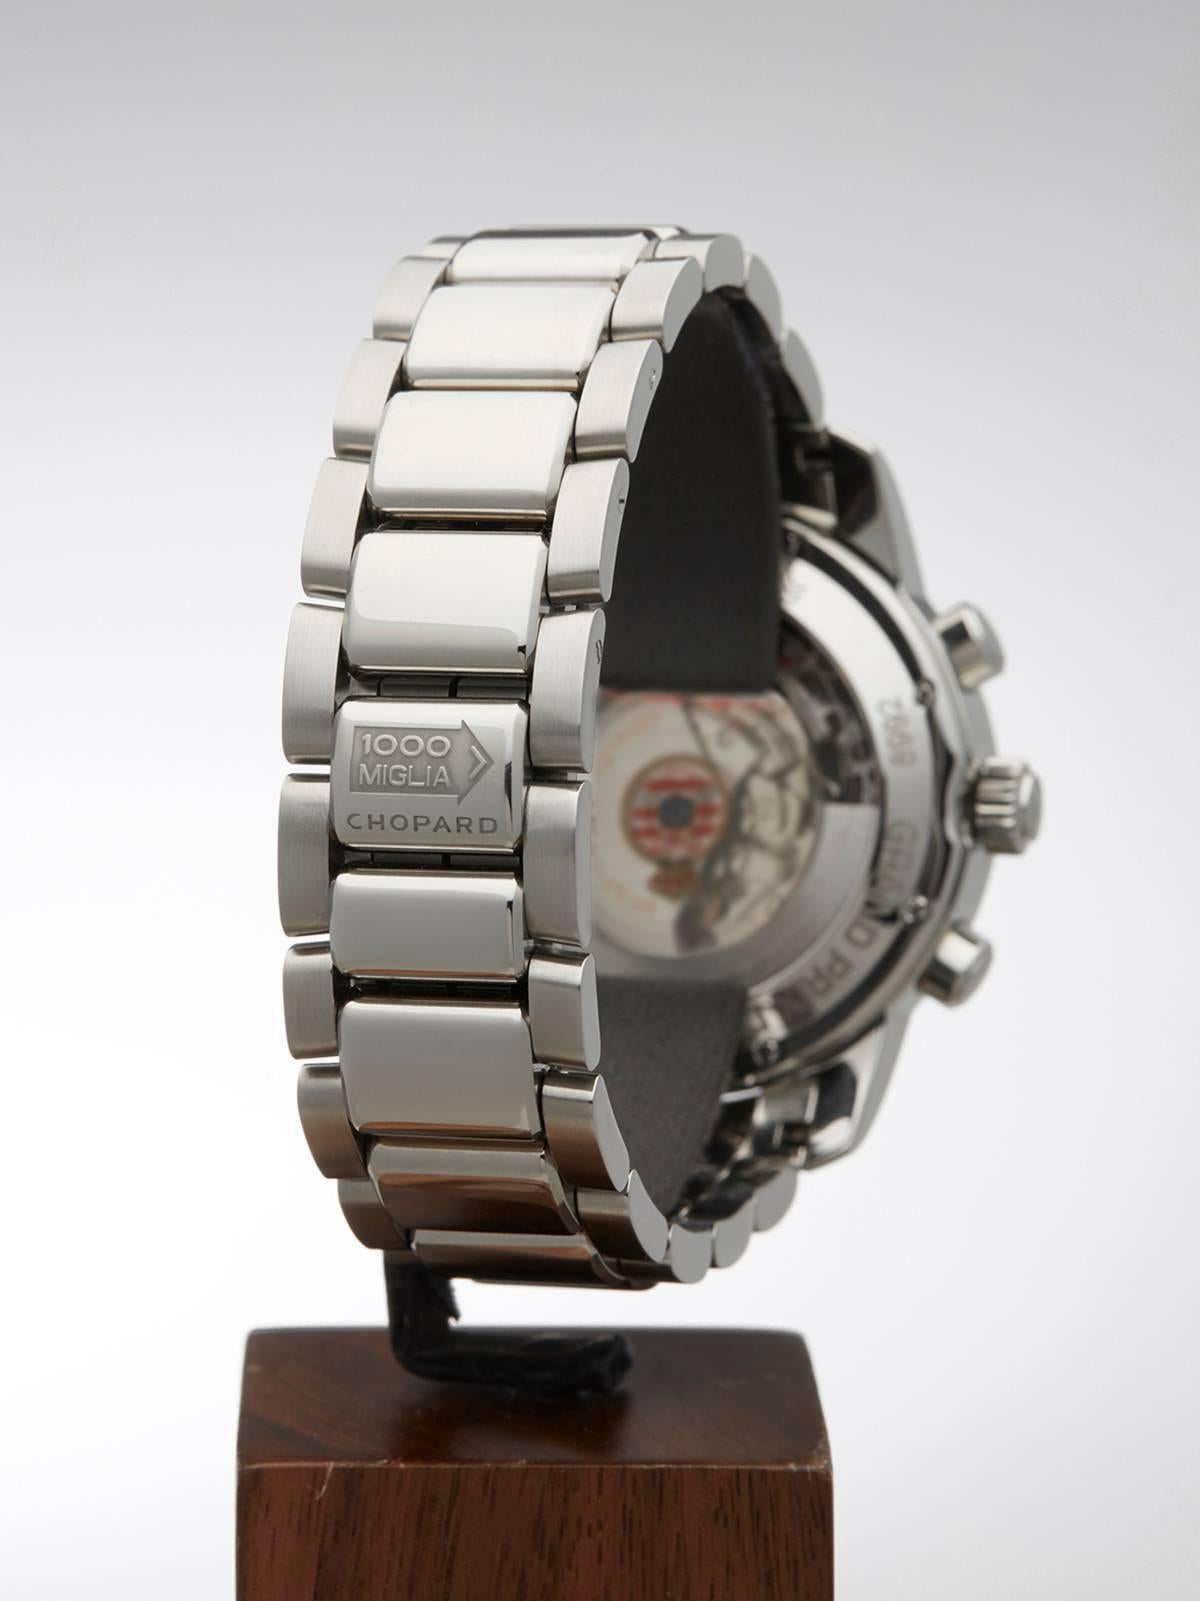  Chopard Stainless Steel Mille Miglia Grand Prix Monaco Historique Wristwatch 3